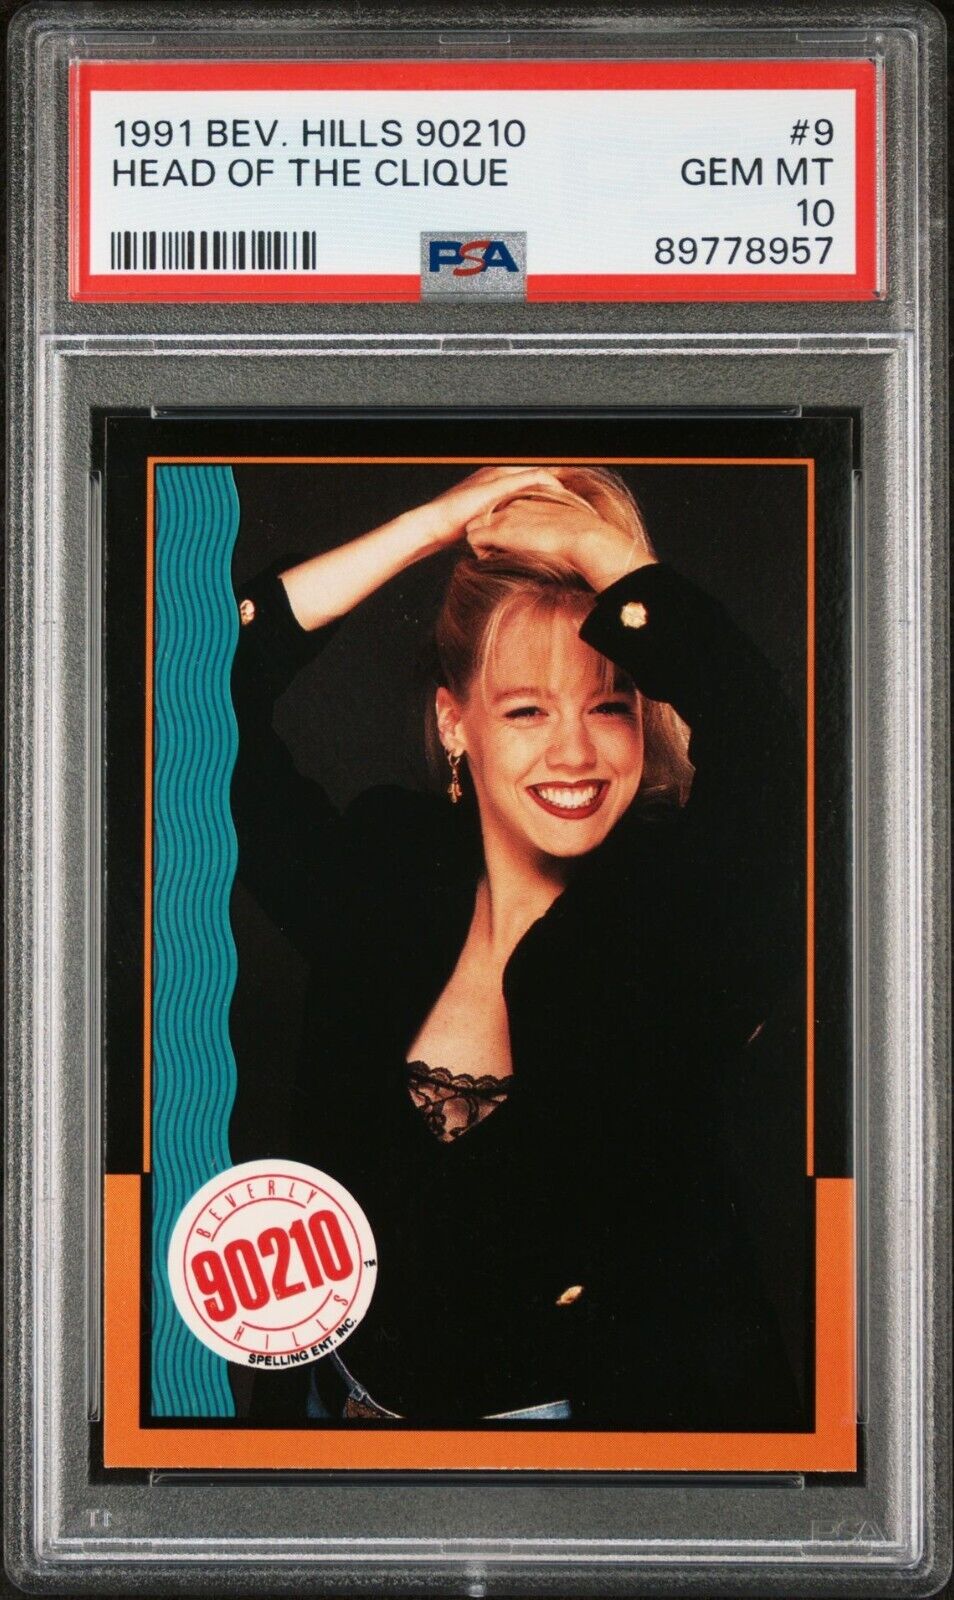 1991 Topps BEVERLY HILLS 90210 Kelly Jennie Garth RC #9 PSA 10 GEM Mint POP 1